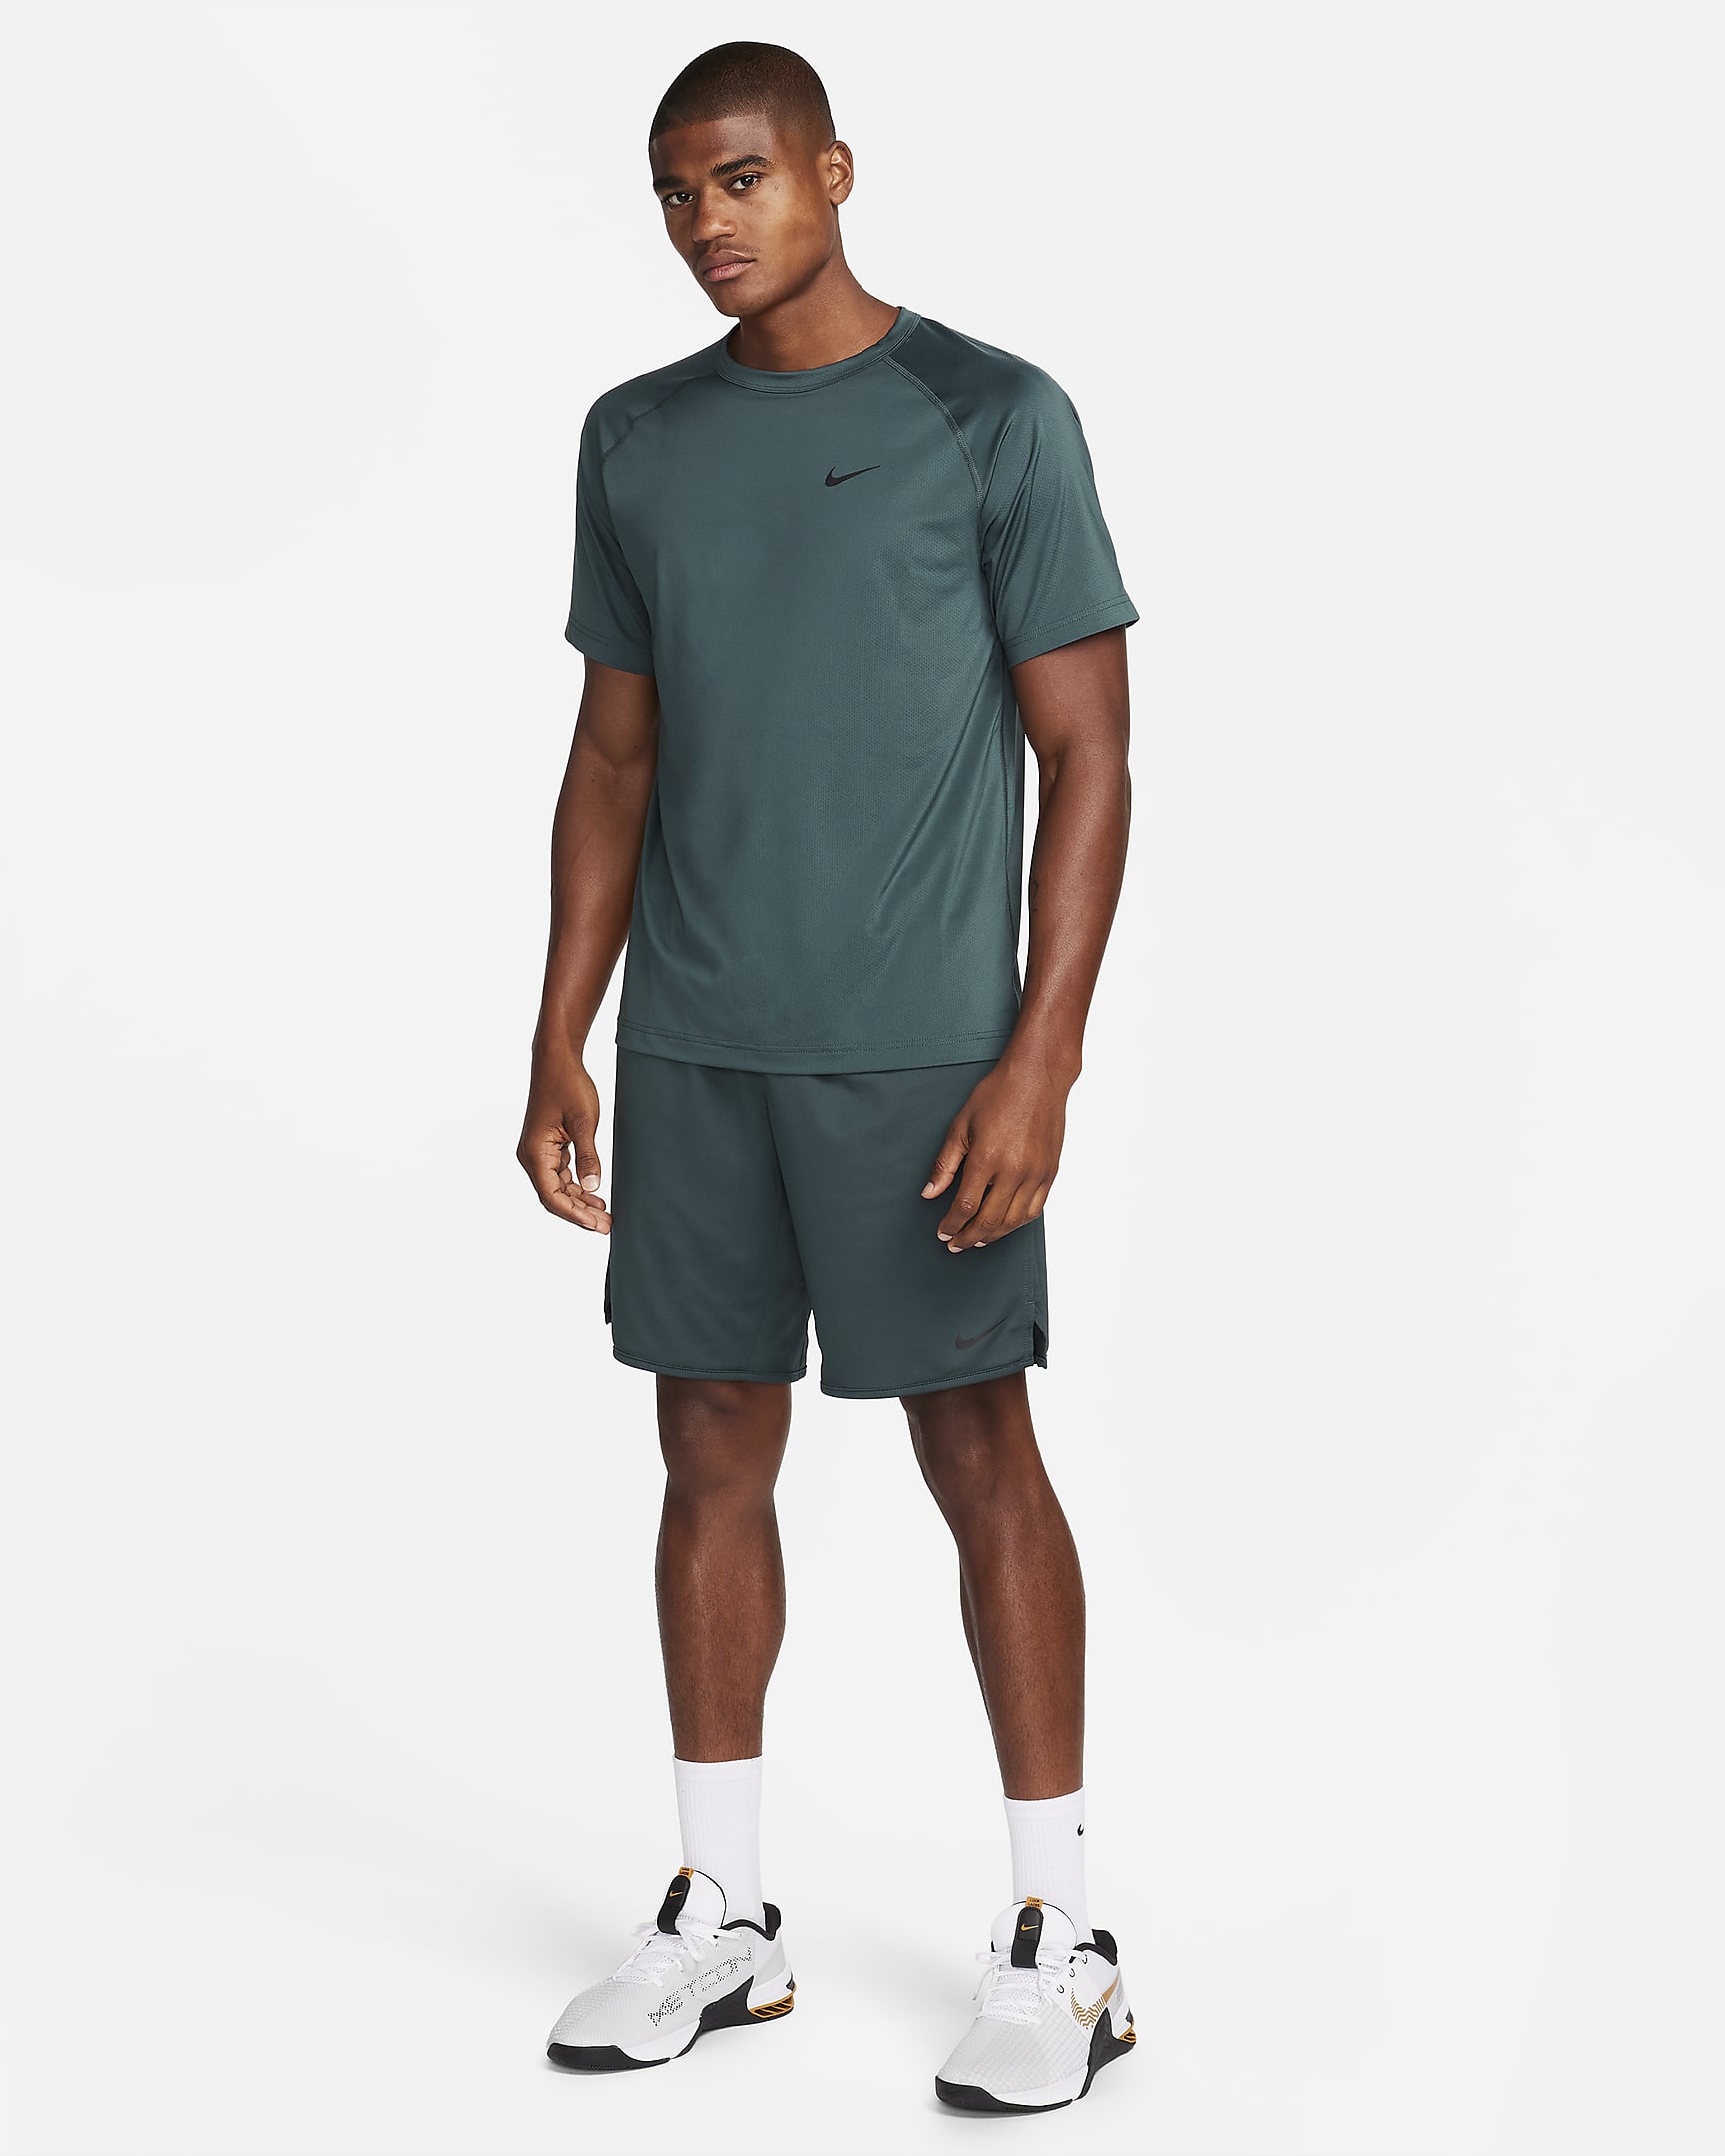 Nike Ready Men's Dri-FIT Short-sleeve Fitness Top. Nike HR